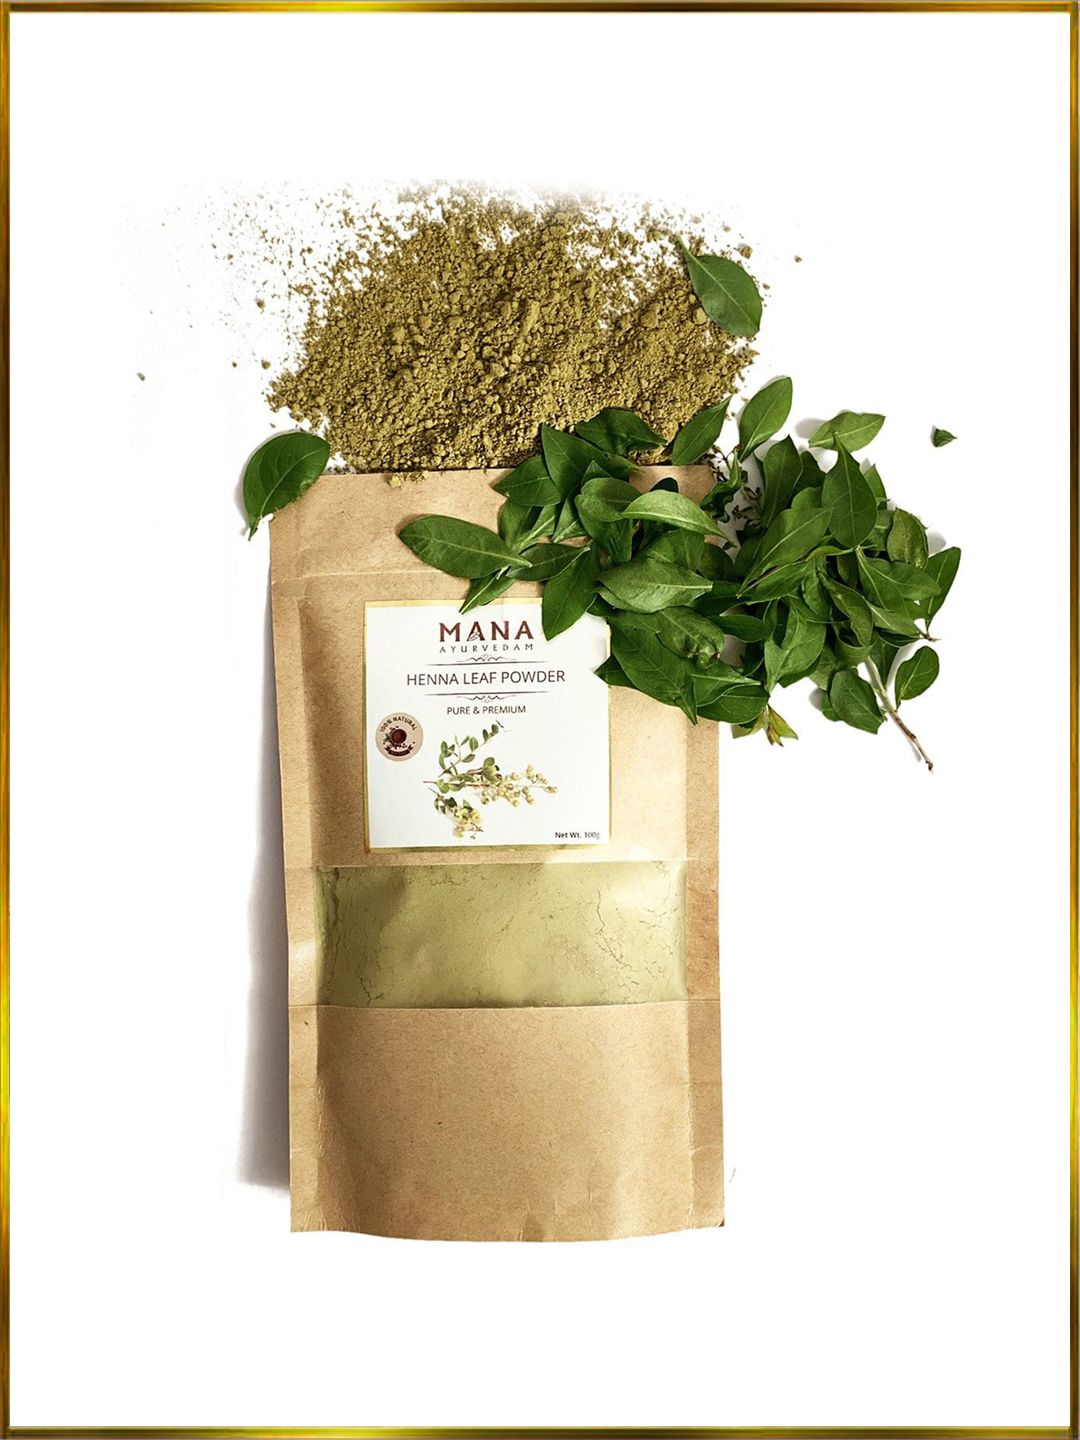 MANA AYURVEDAM Green Henna Leaf Powder 100g Price in India